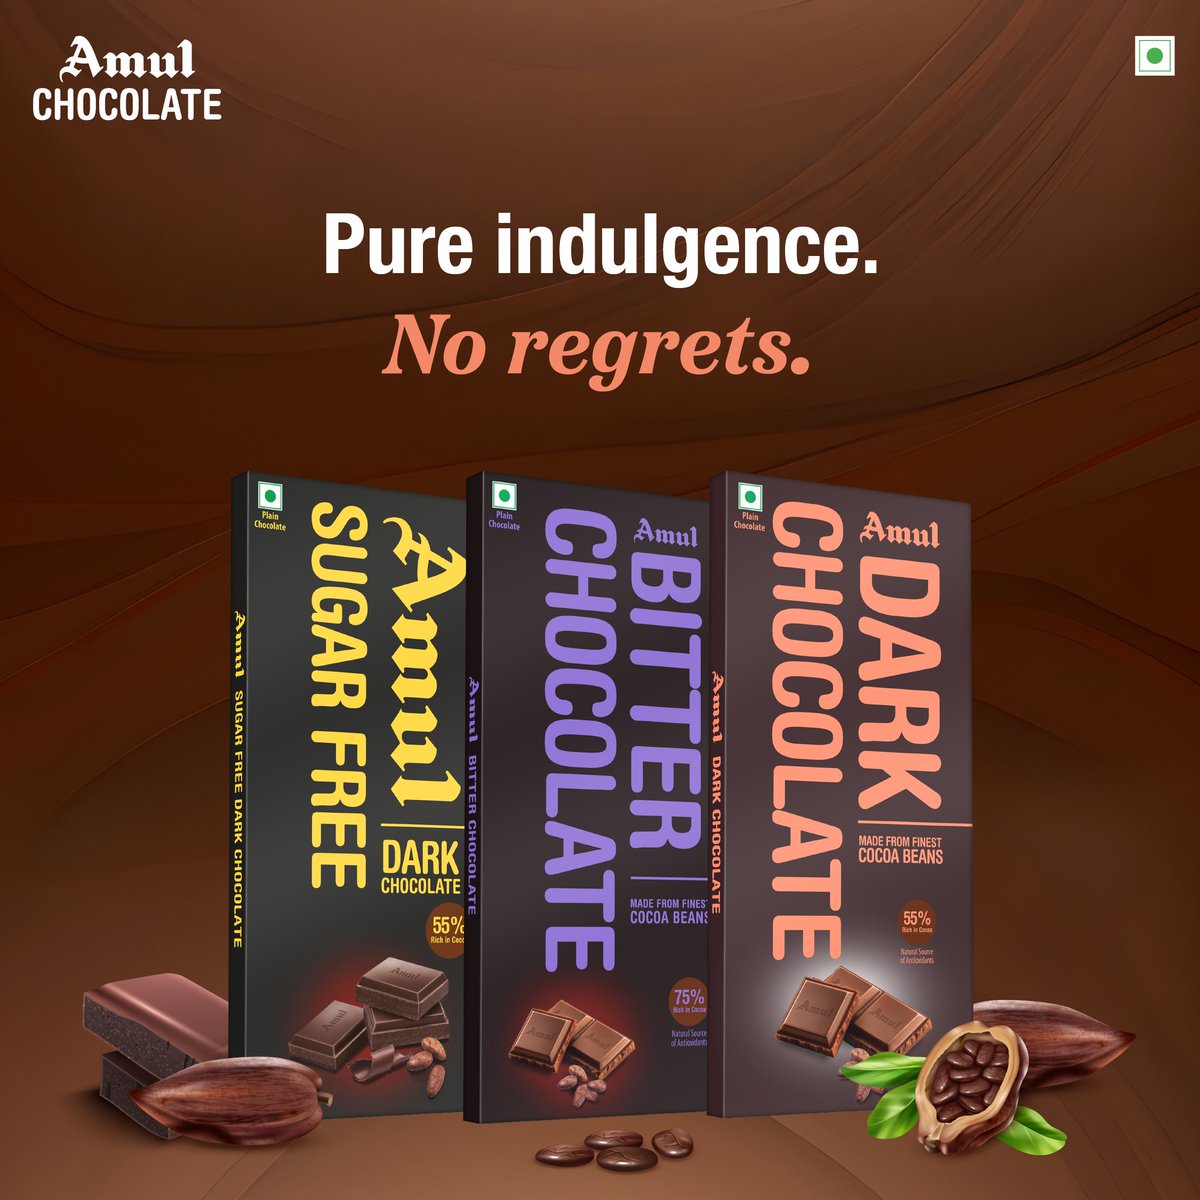 Indulge in the goodness of Amul Dark Chocolate Range! #Amul #DarkChocolate #HealthyTreat #sugarfree